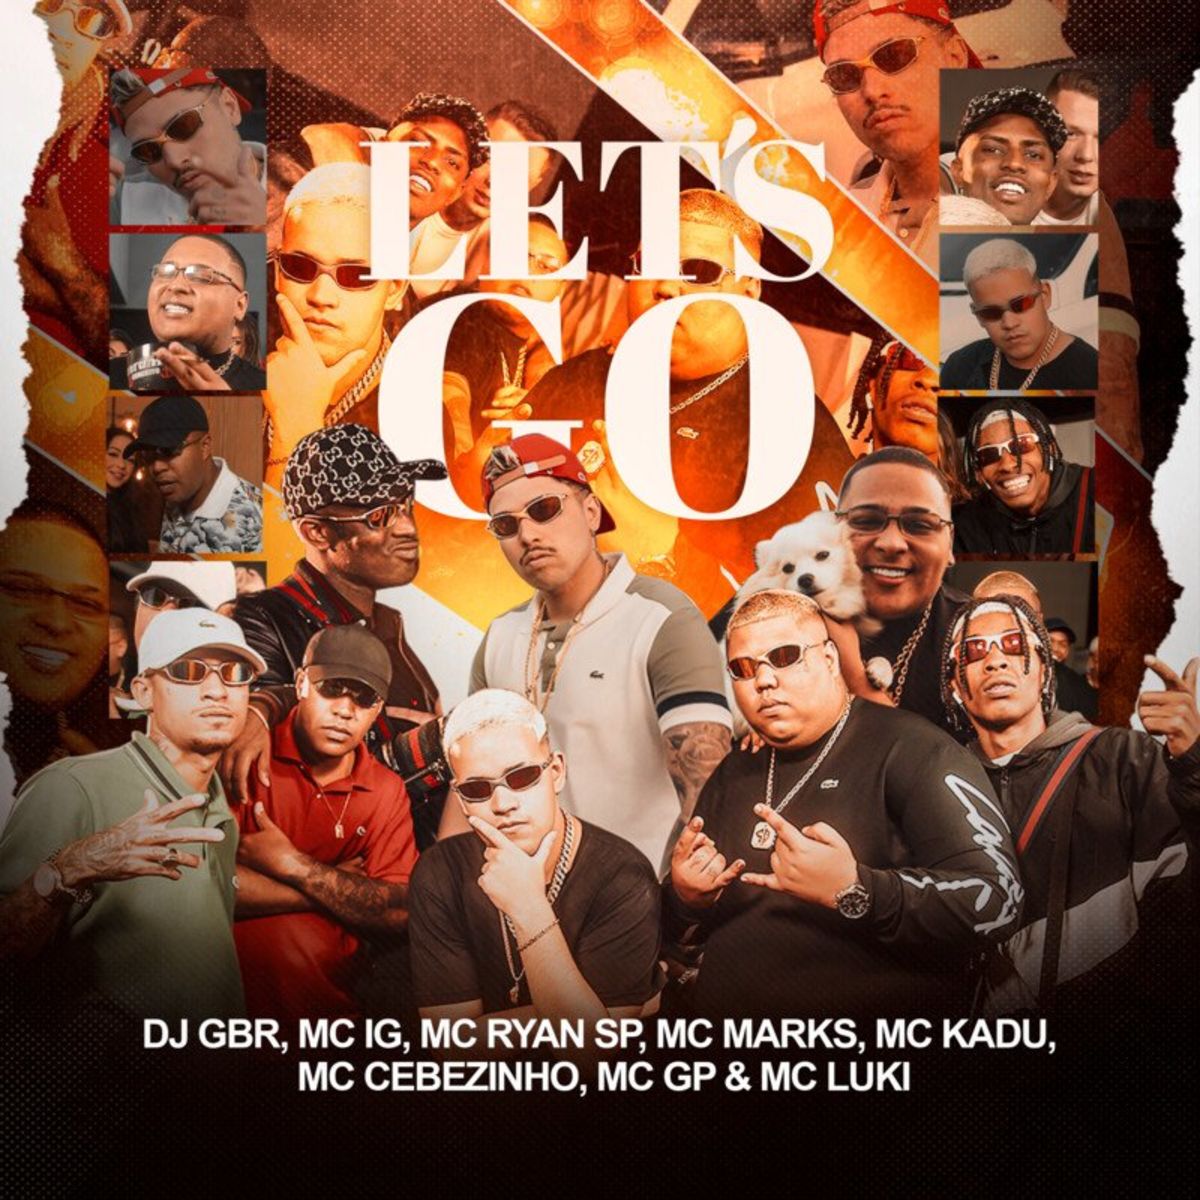 LET'S GO 4 - DJ GBR, IG, Ryan SP, PH, Davi, Luki, Don Juan, Kadu ,GH do 7, GP, TrapLaudo